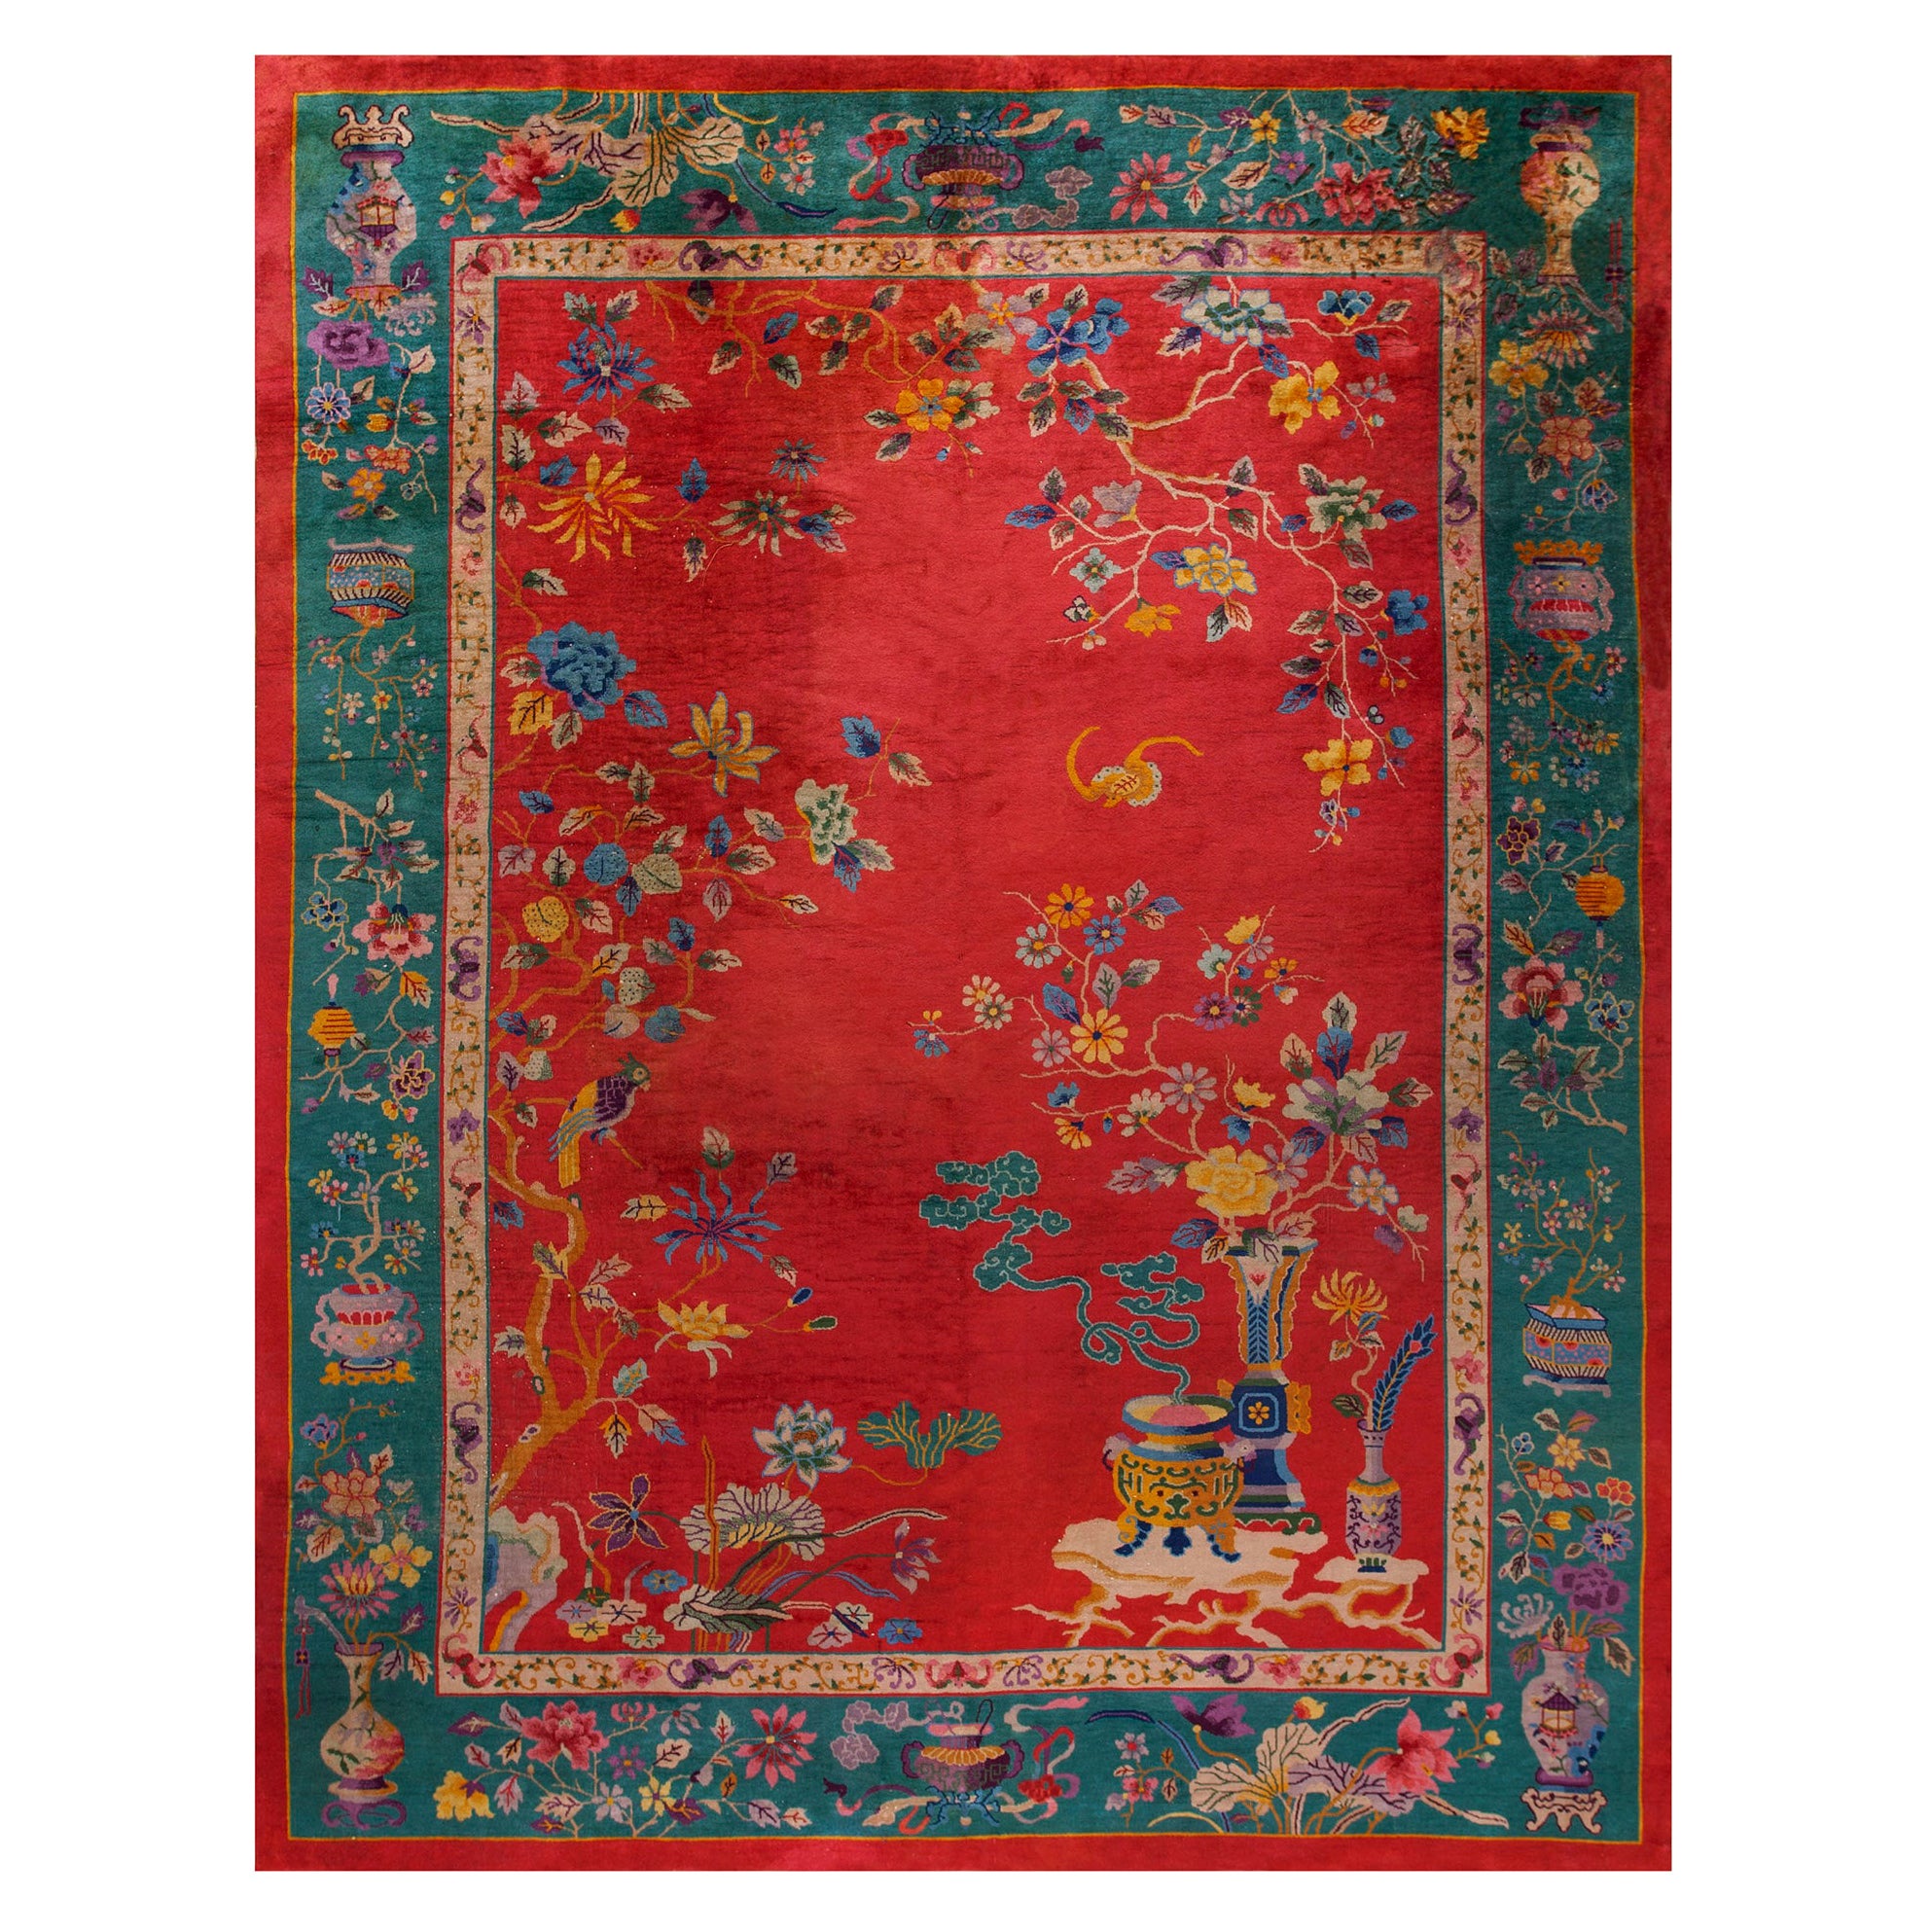 1920s Chinese Art Deco Carpet ( 9' x 11' 8'' - 275 x 355 cm ) For Sale